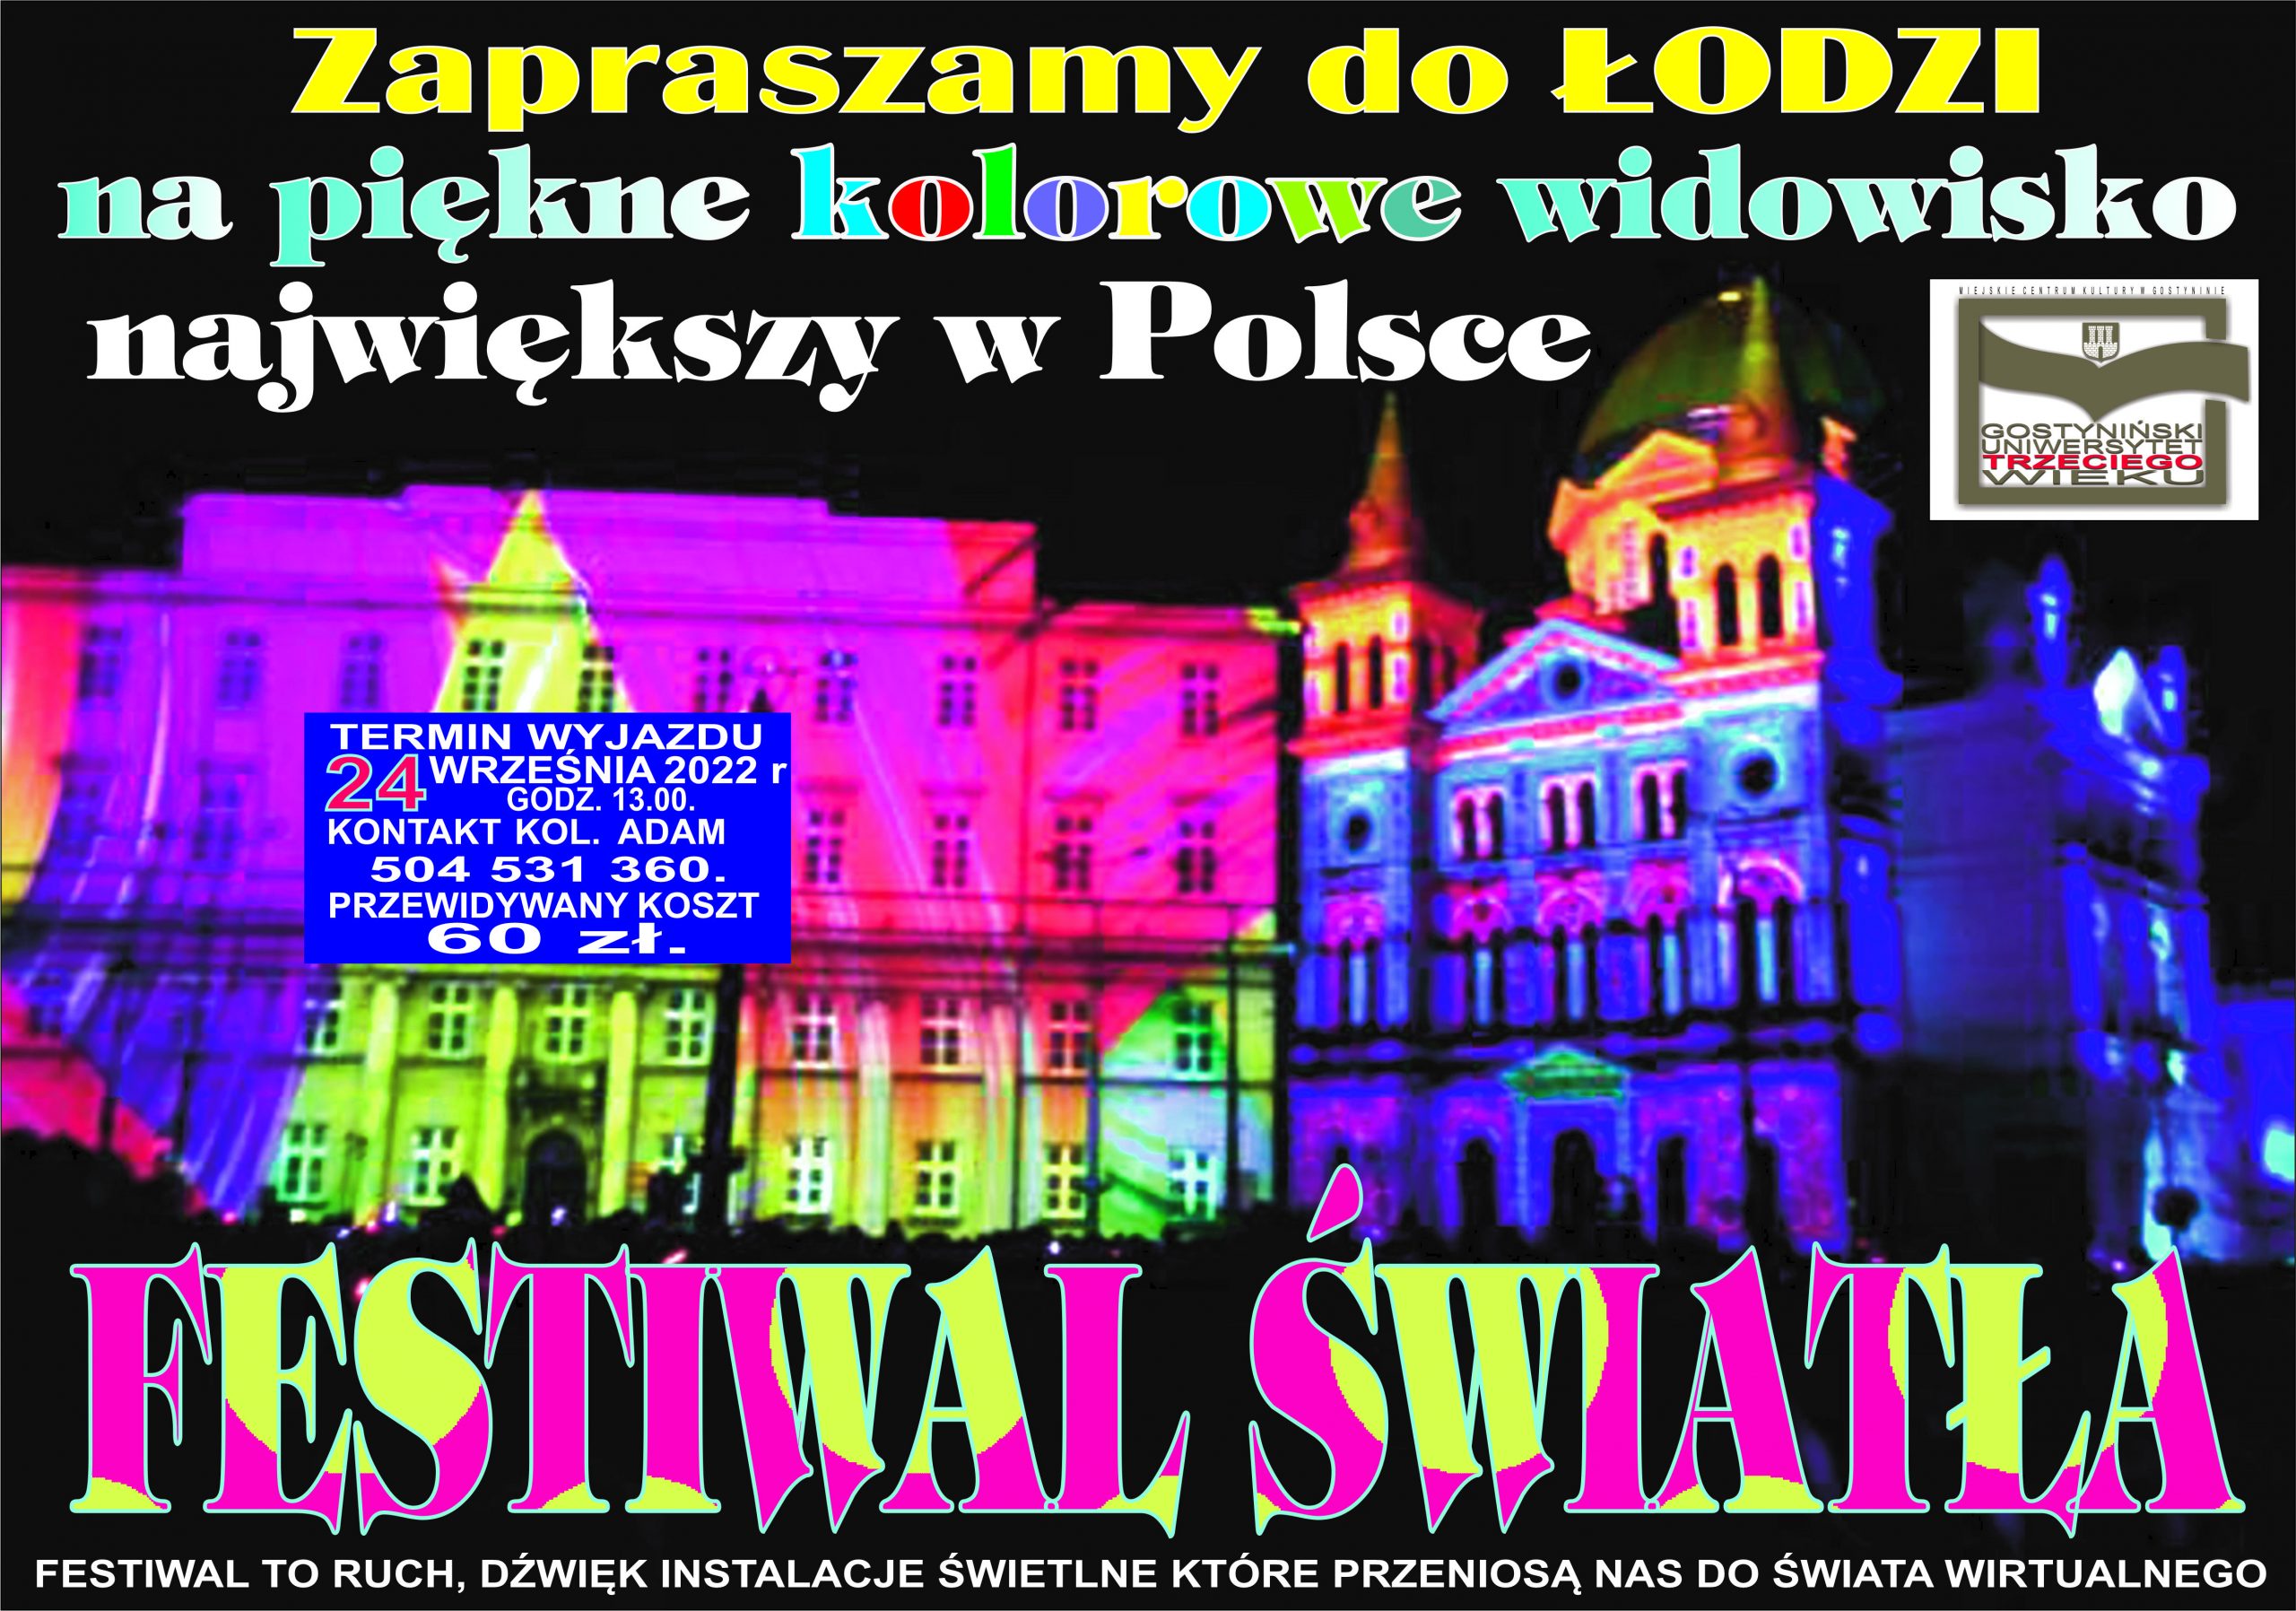 Festiwal Światła – Łódź